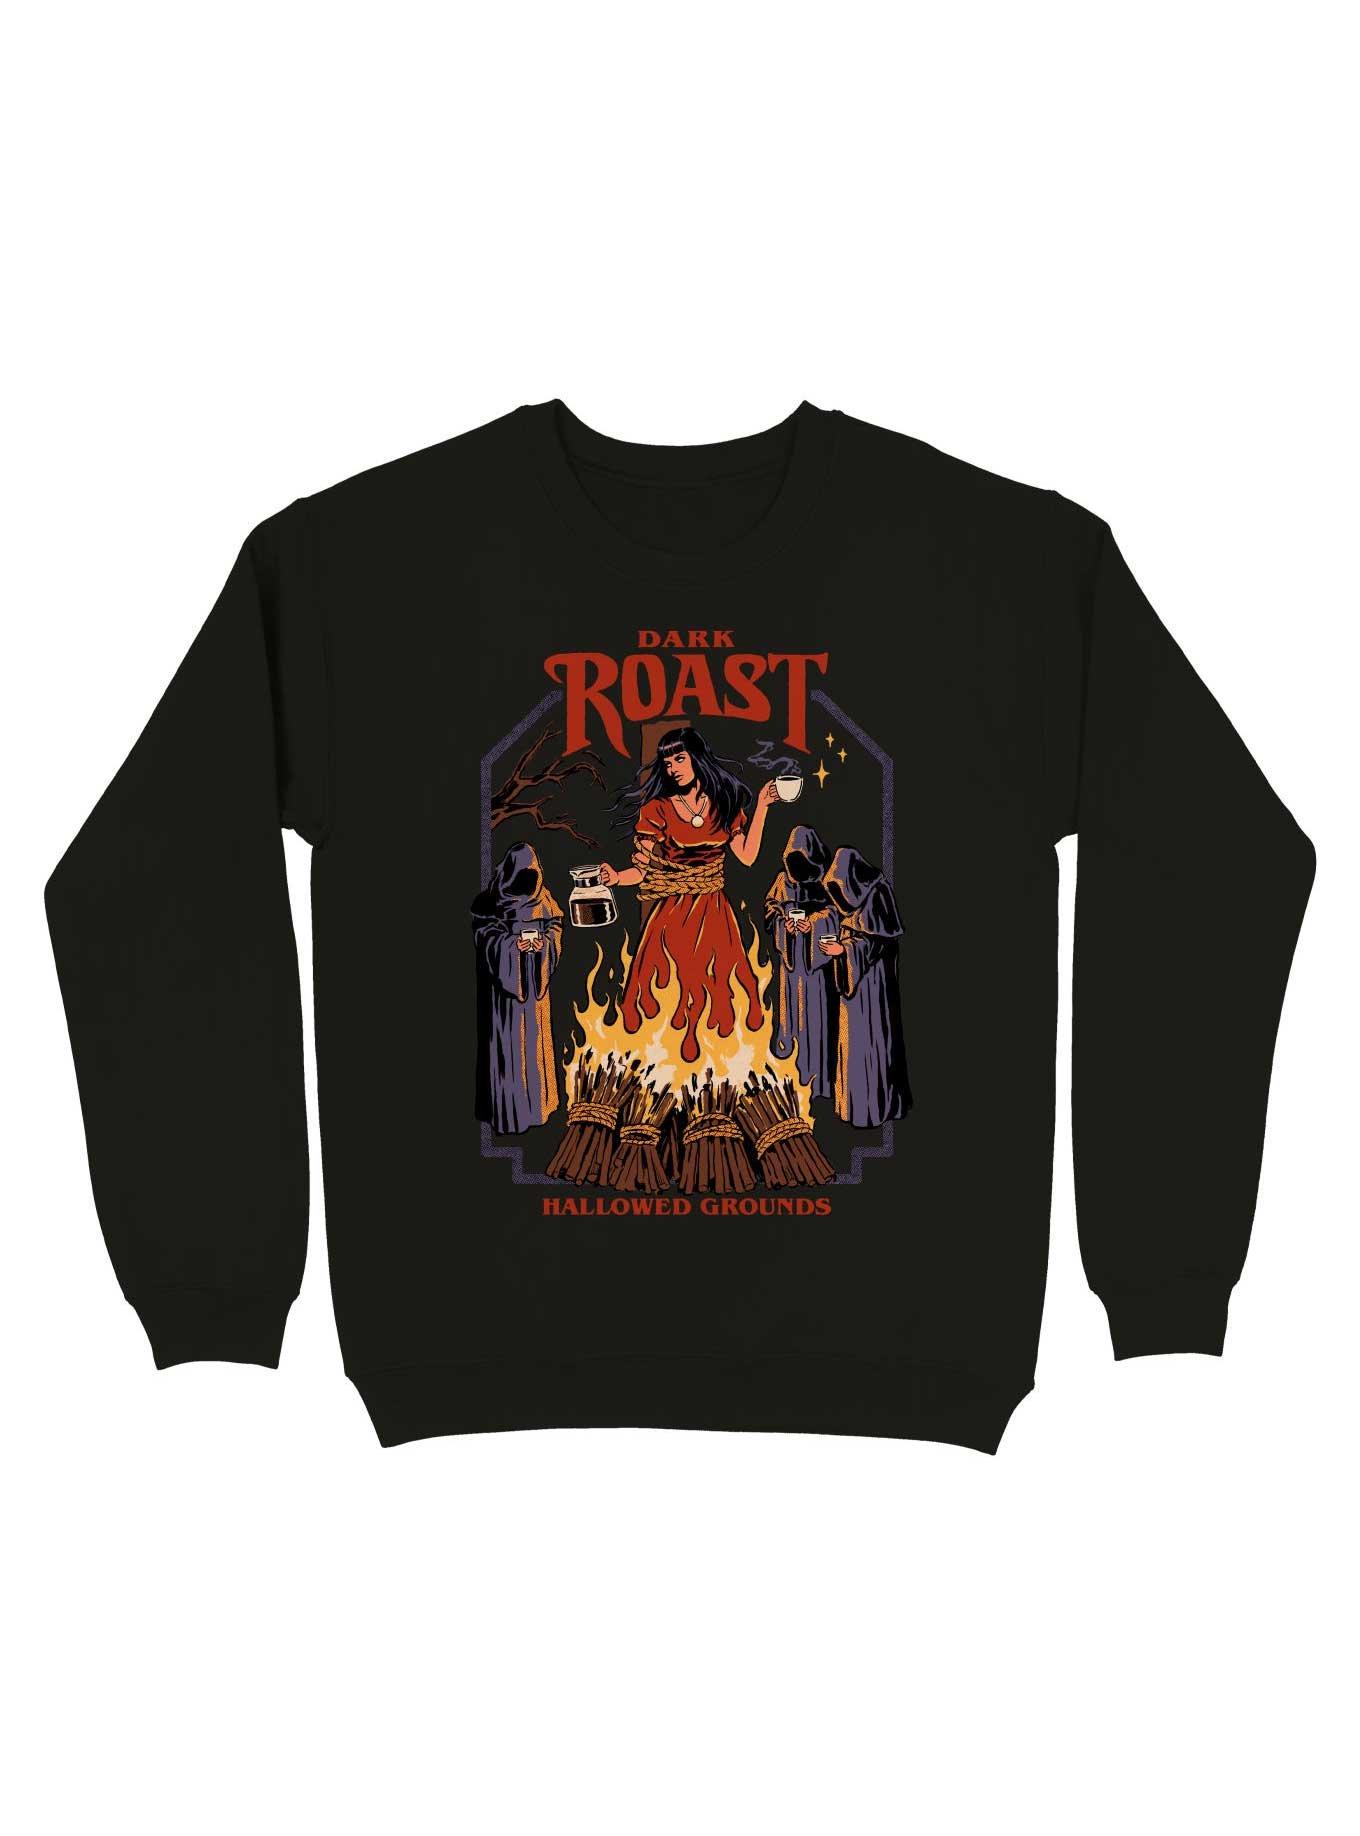 Dark Roast Sweatshirt By Steven Rhodes